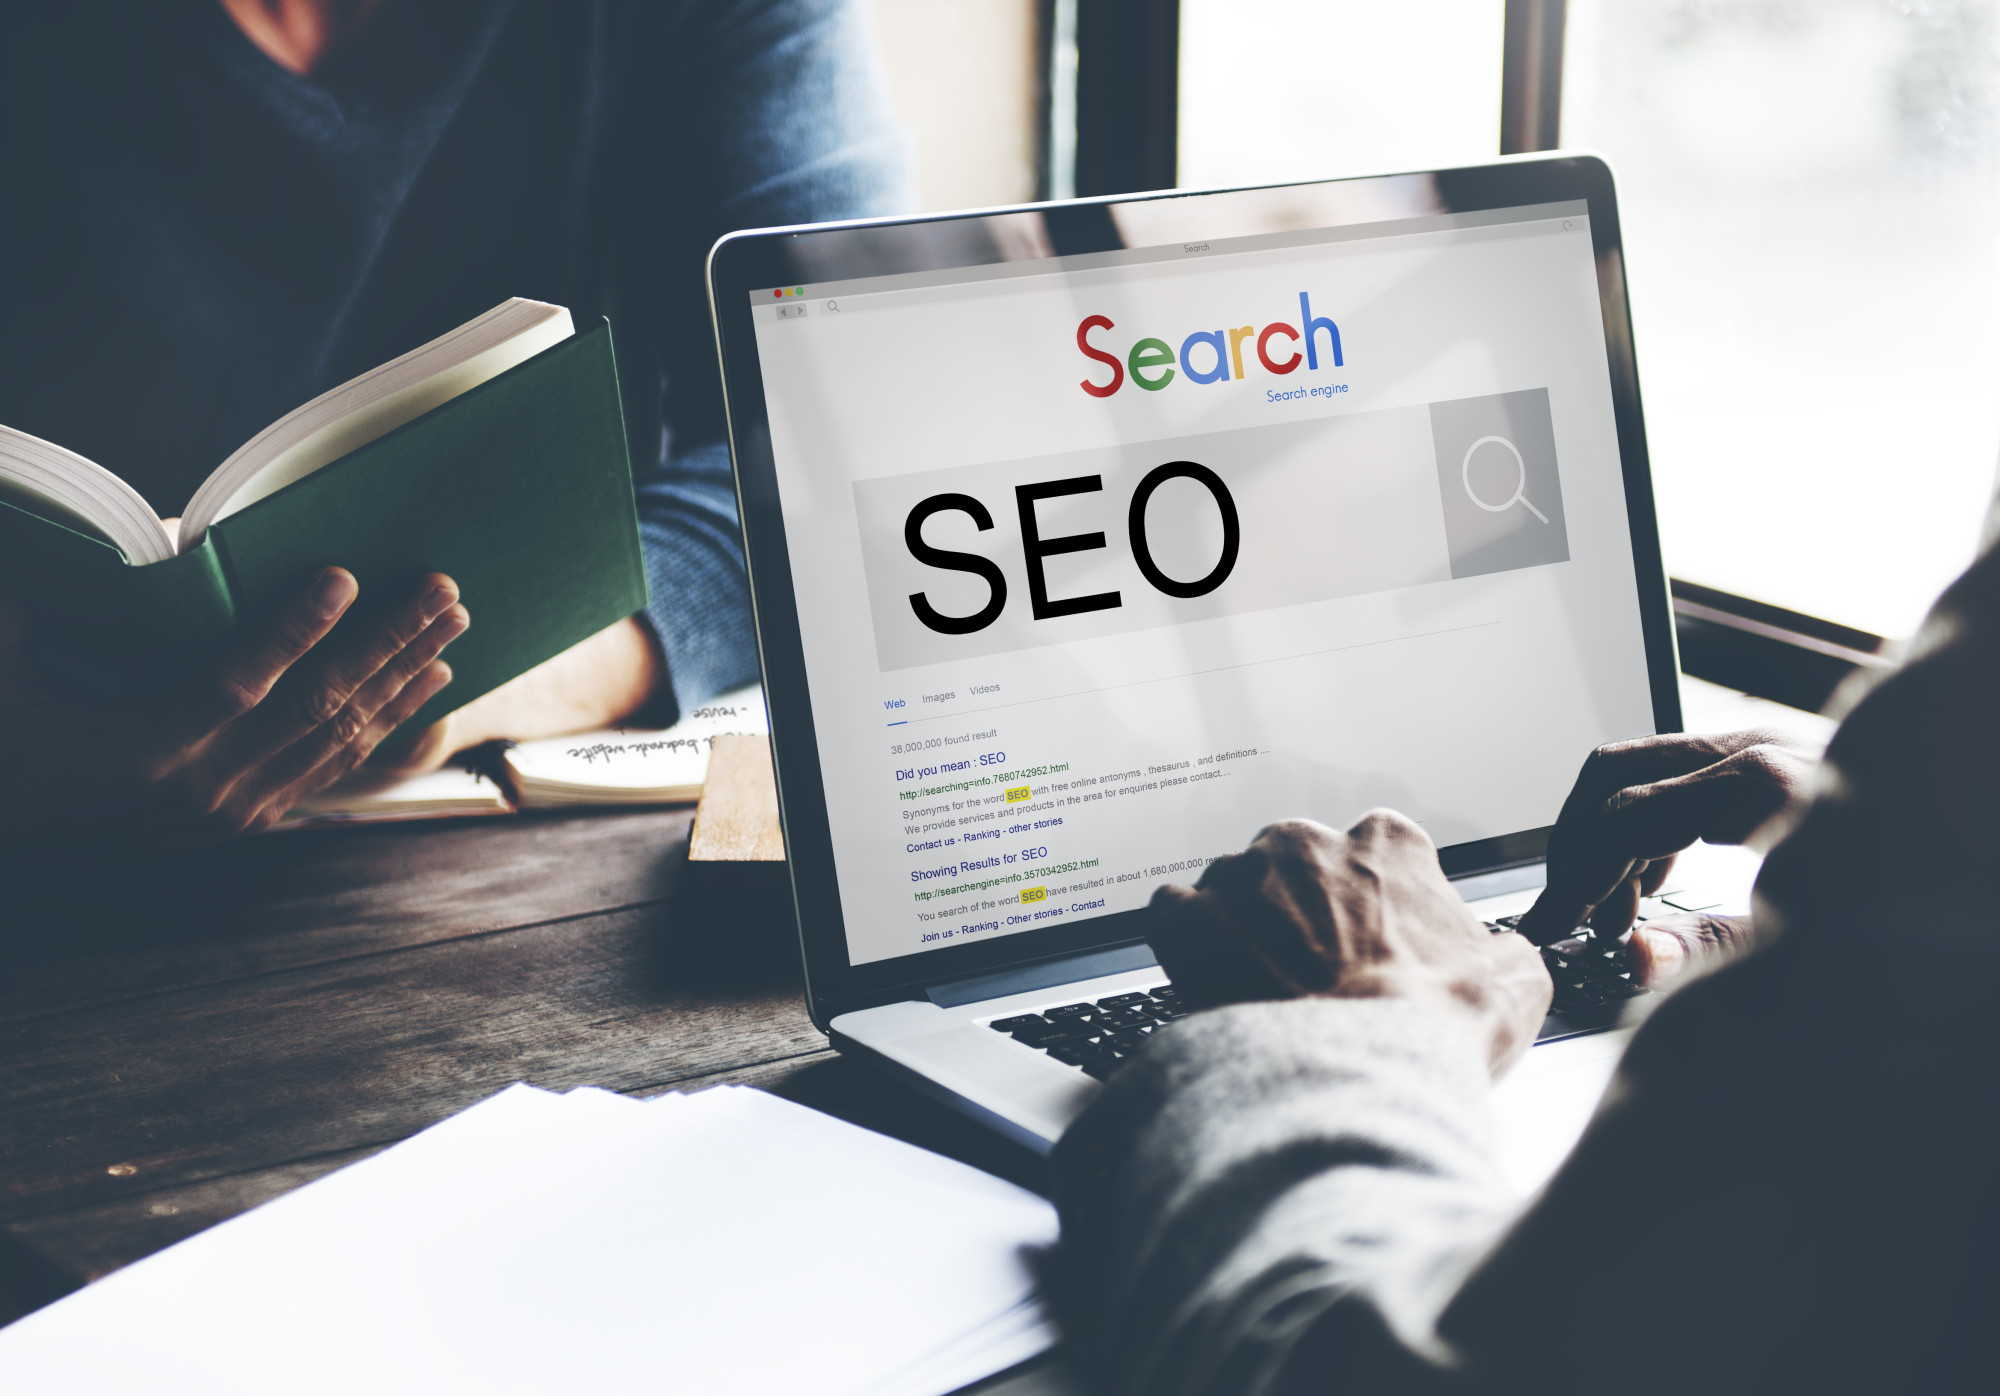 7 Key Benefits of Search Engine Optimization